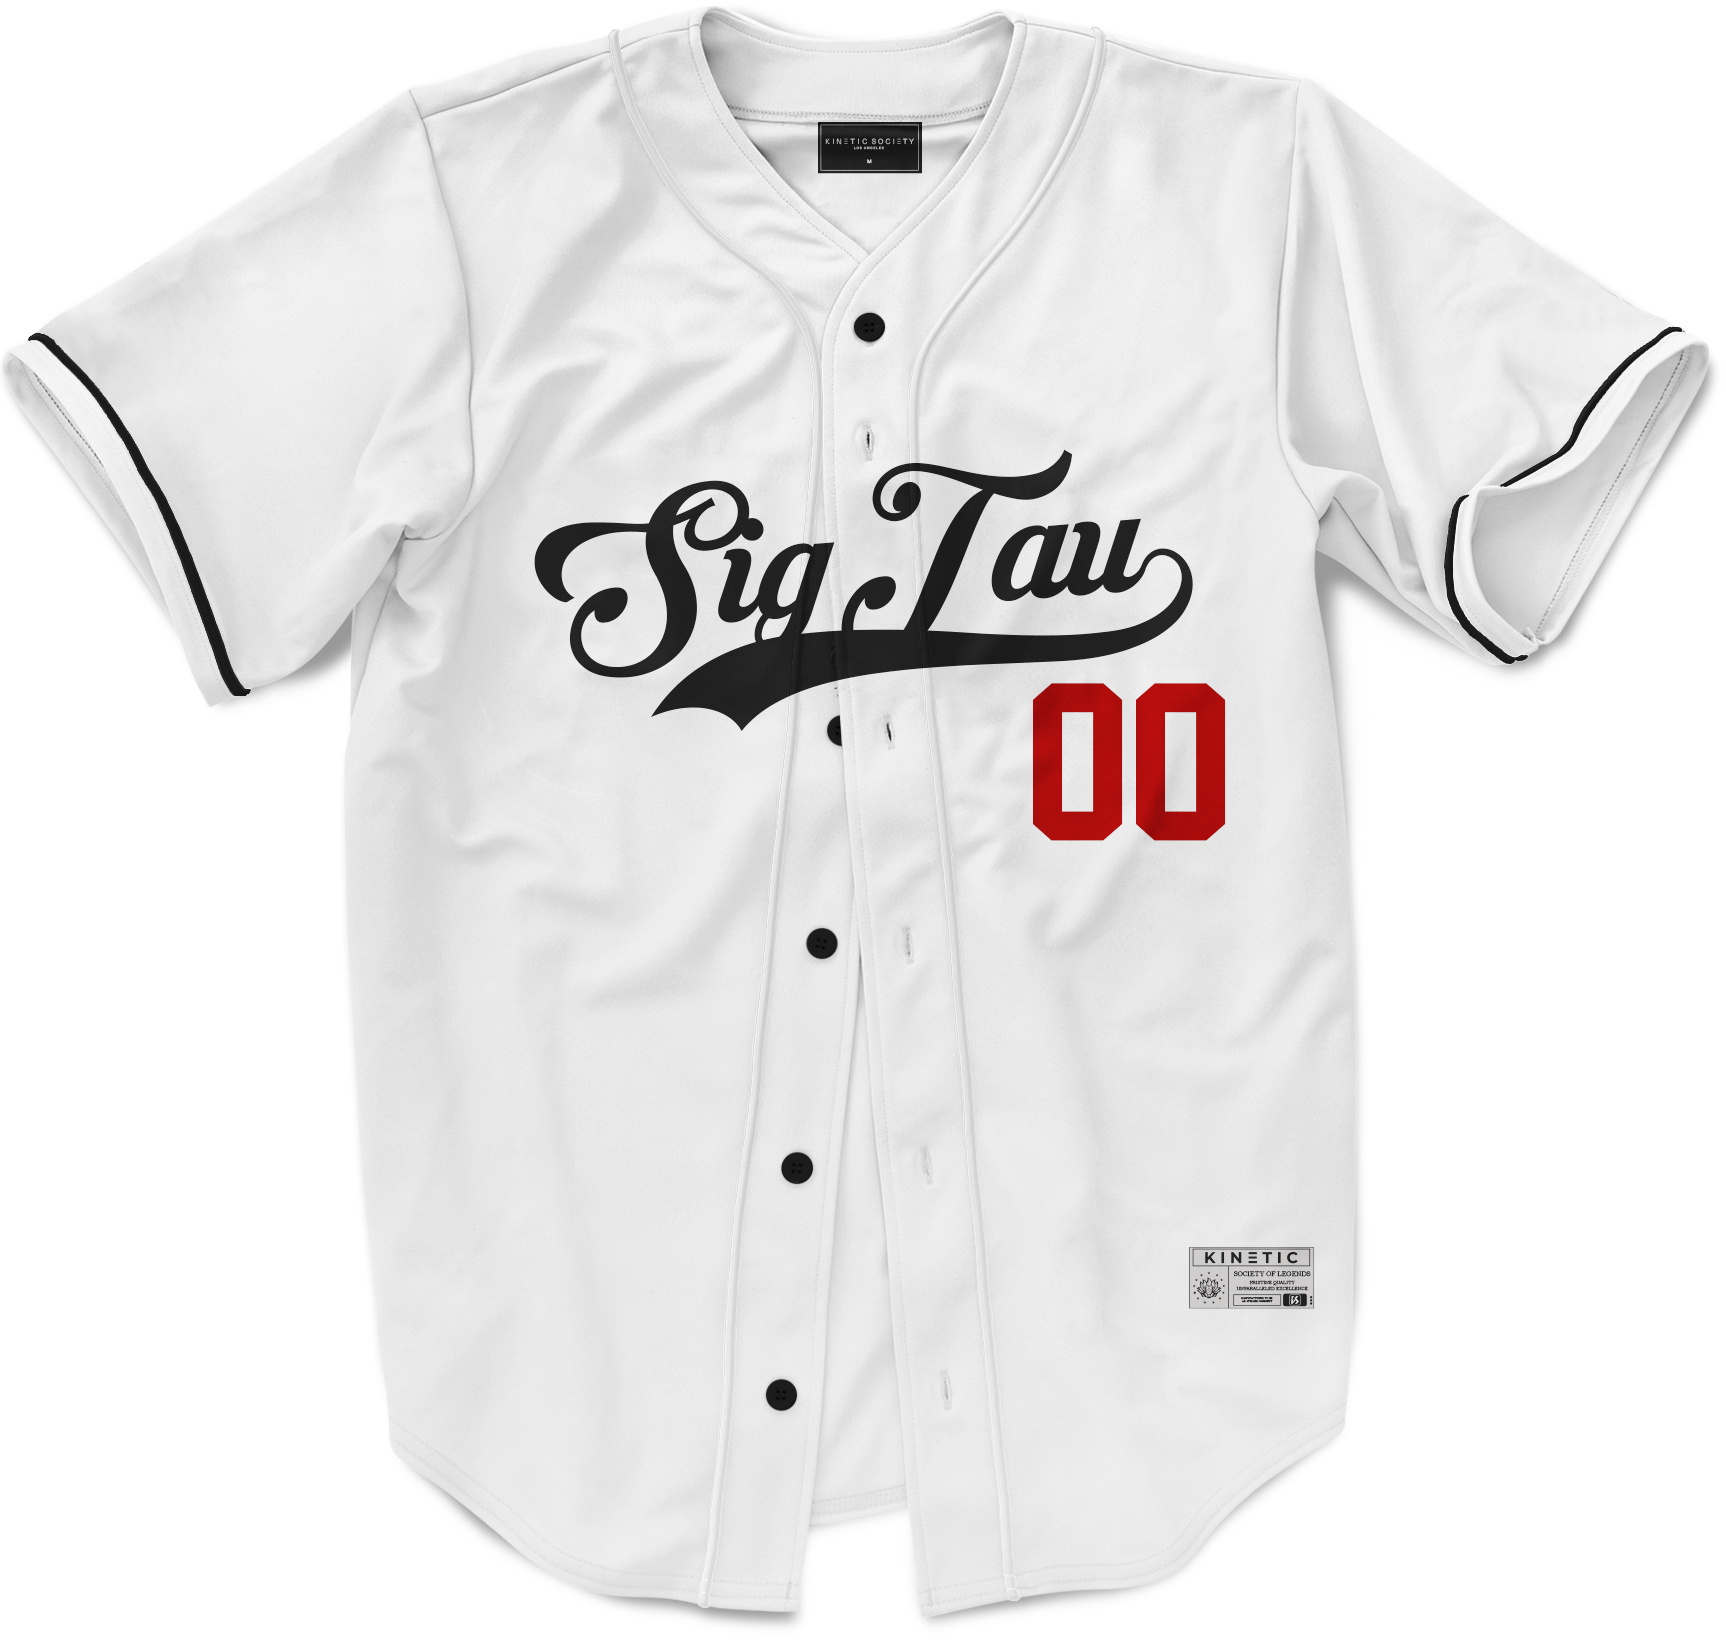 Sigma Tau Gamma - Classic Ballpark Red Baseball Jersey